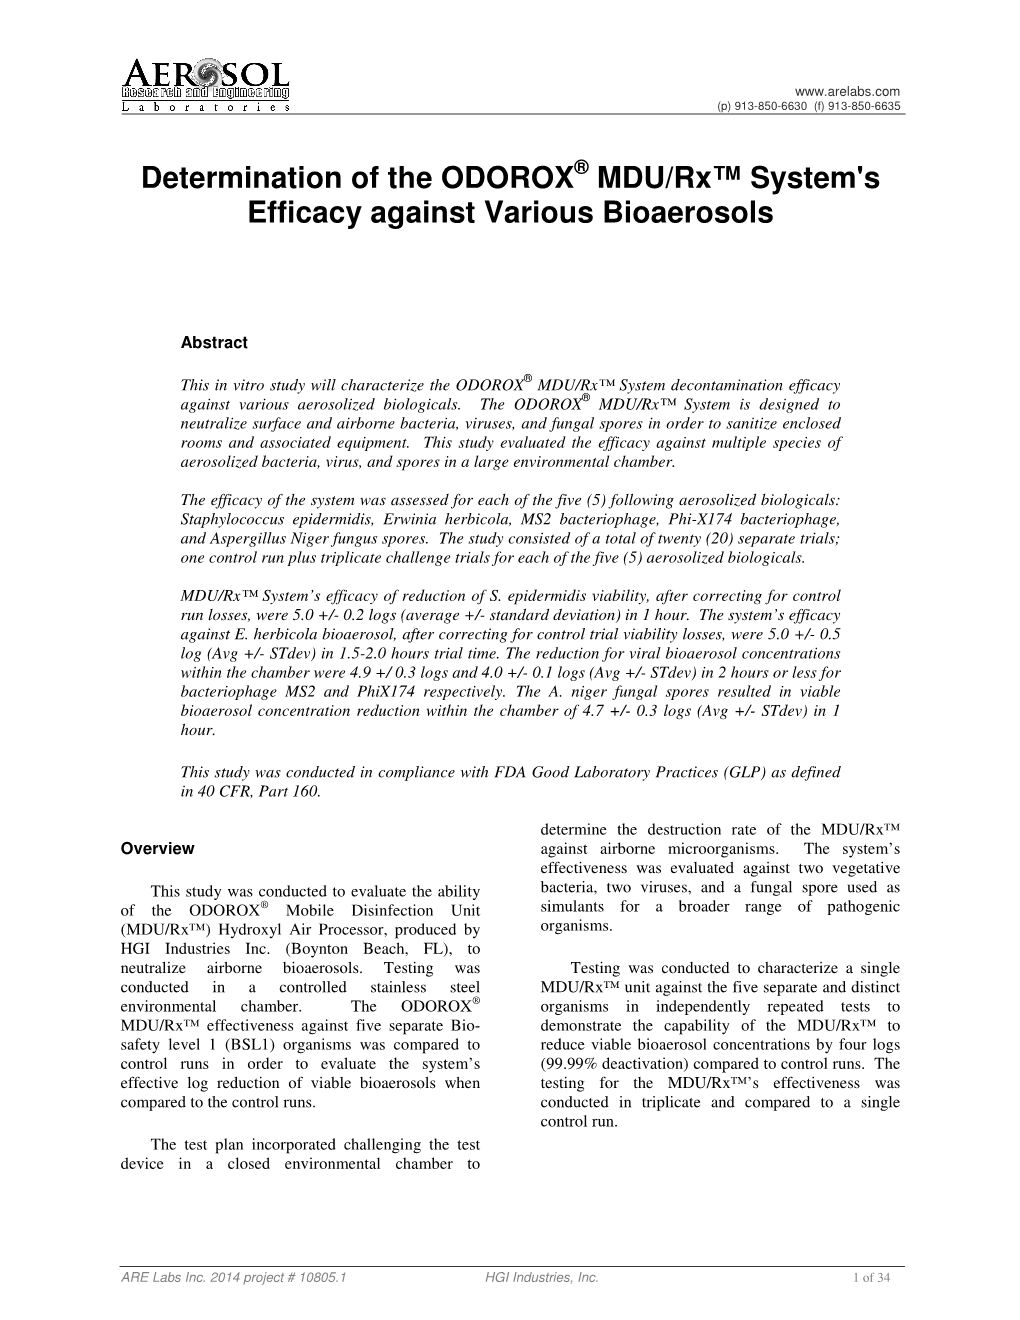 Determination of the ODOROX MDU/Rx™ System's Efficacy